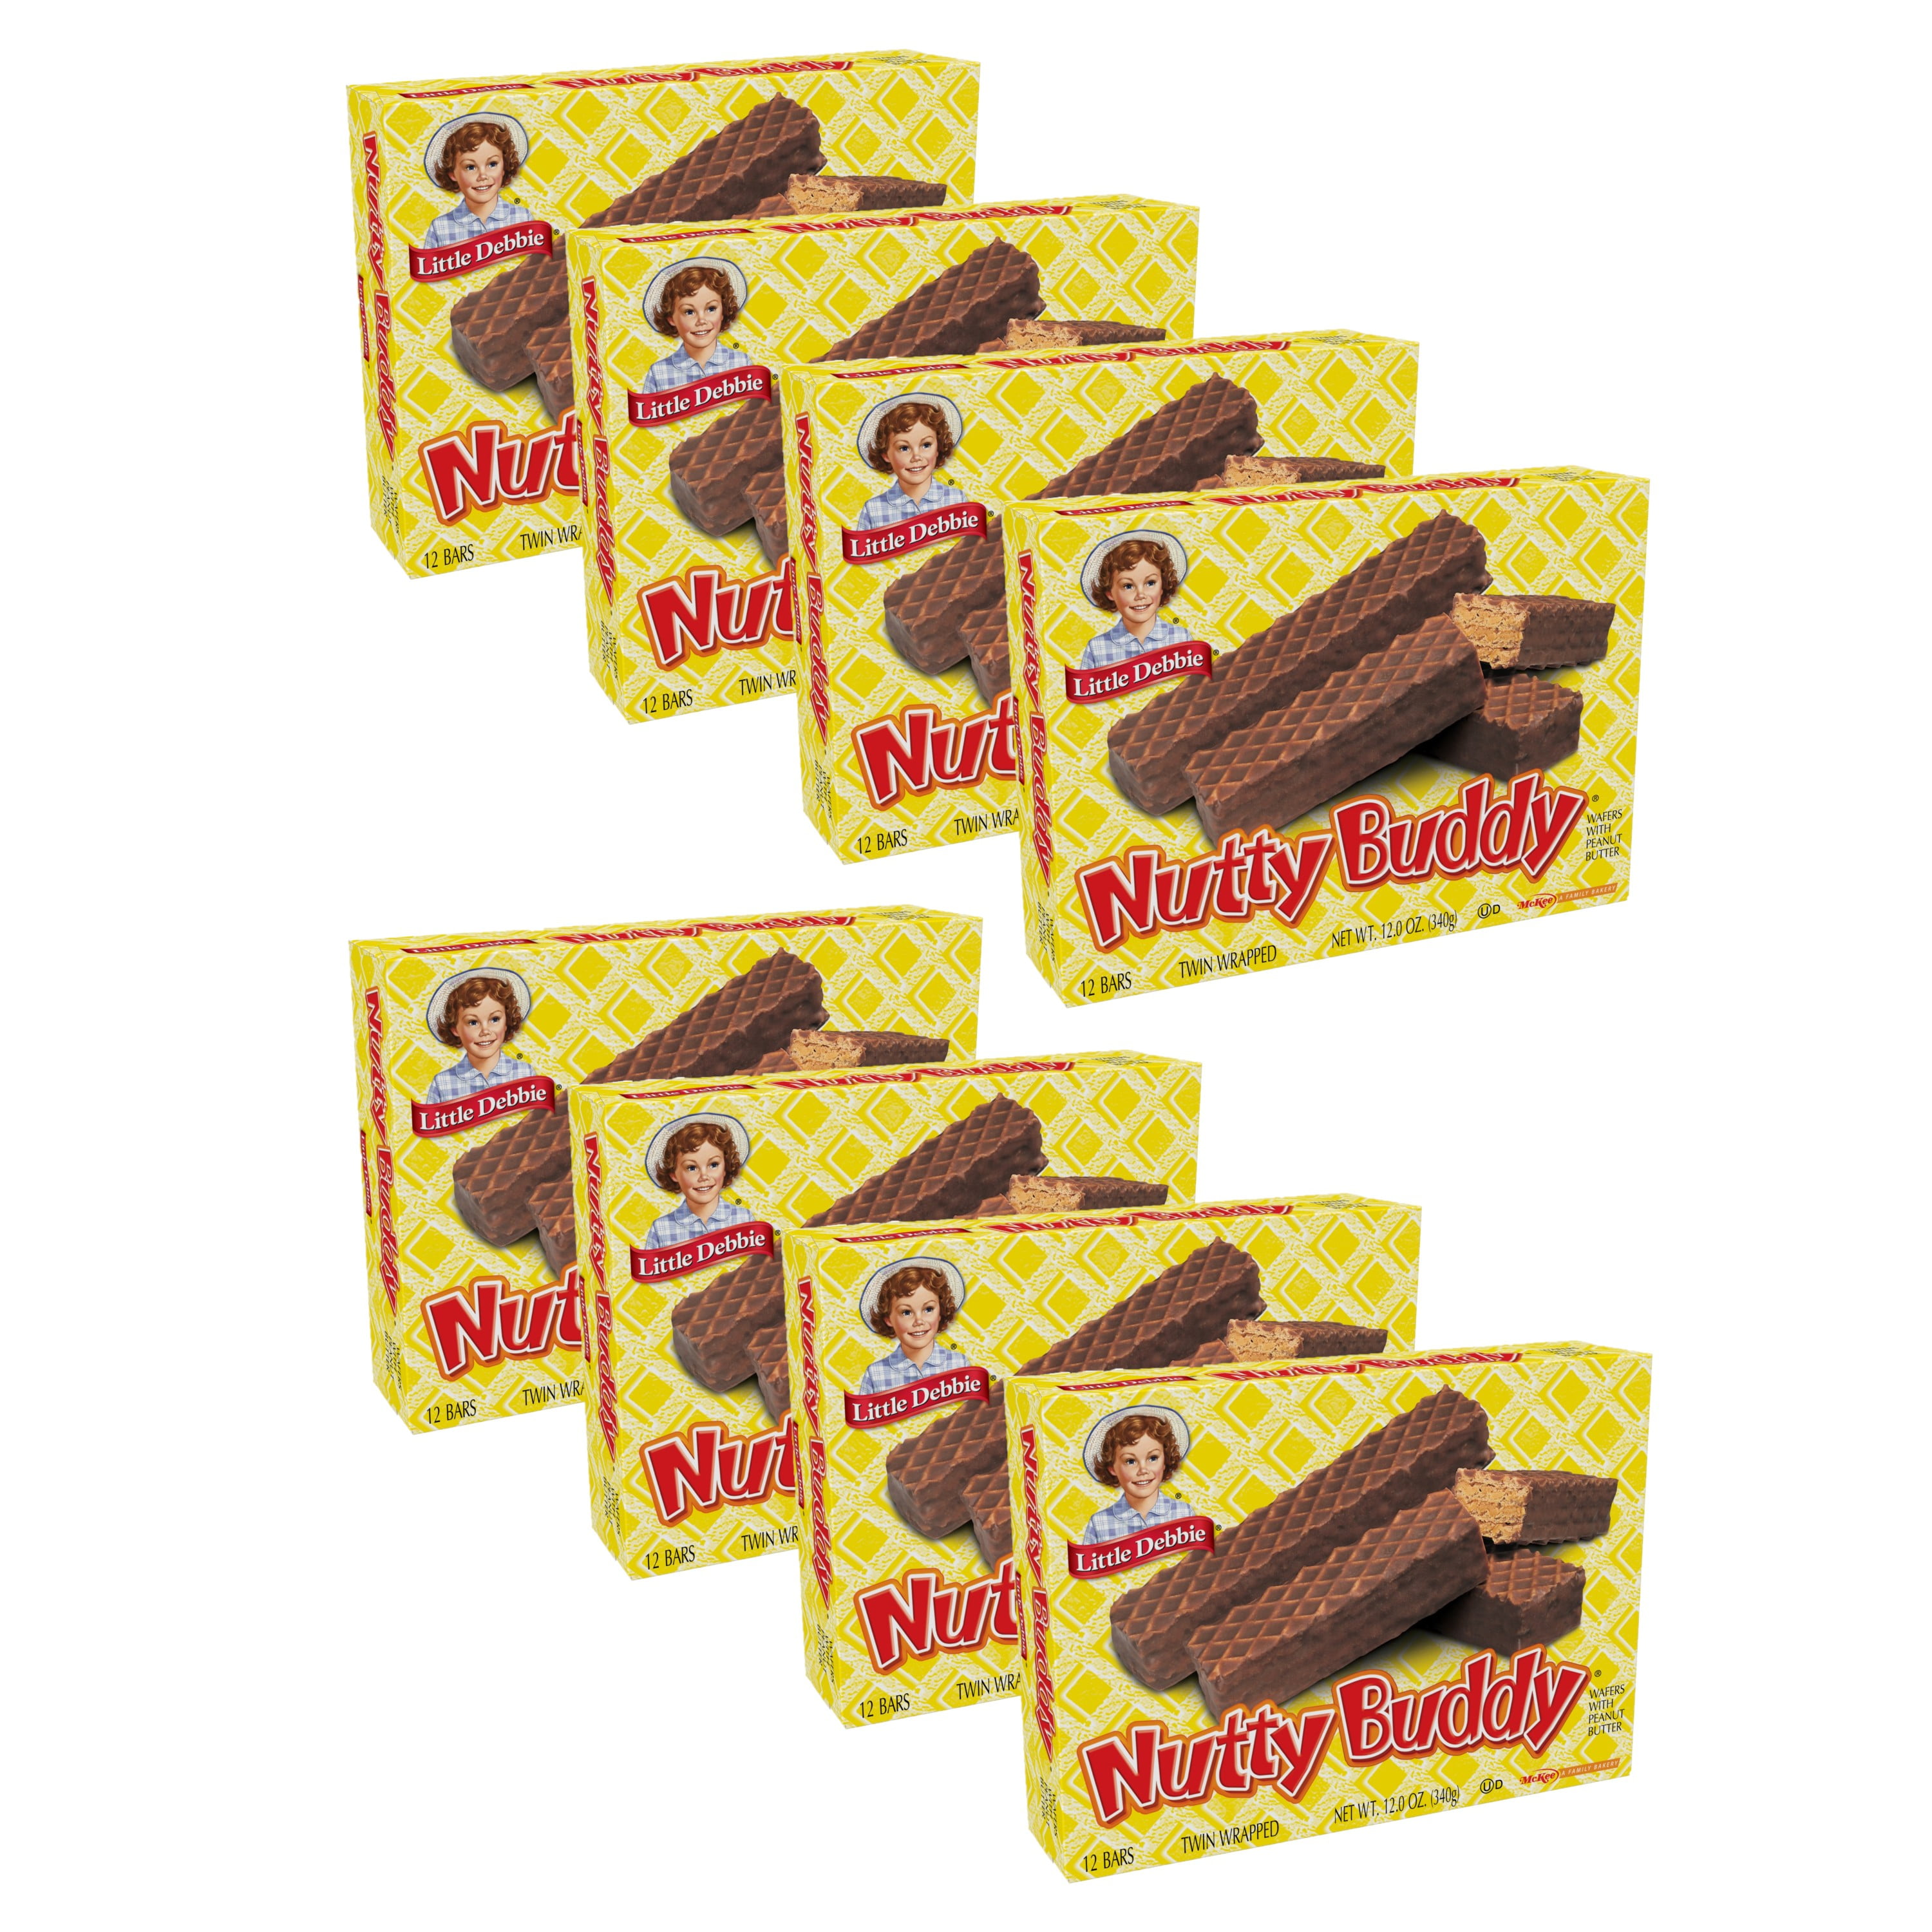 Little Debbie Nutty Buddy Peanut Butter Wafer Bars, 8 Boxes